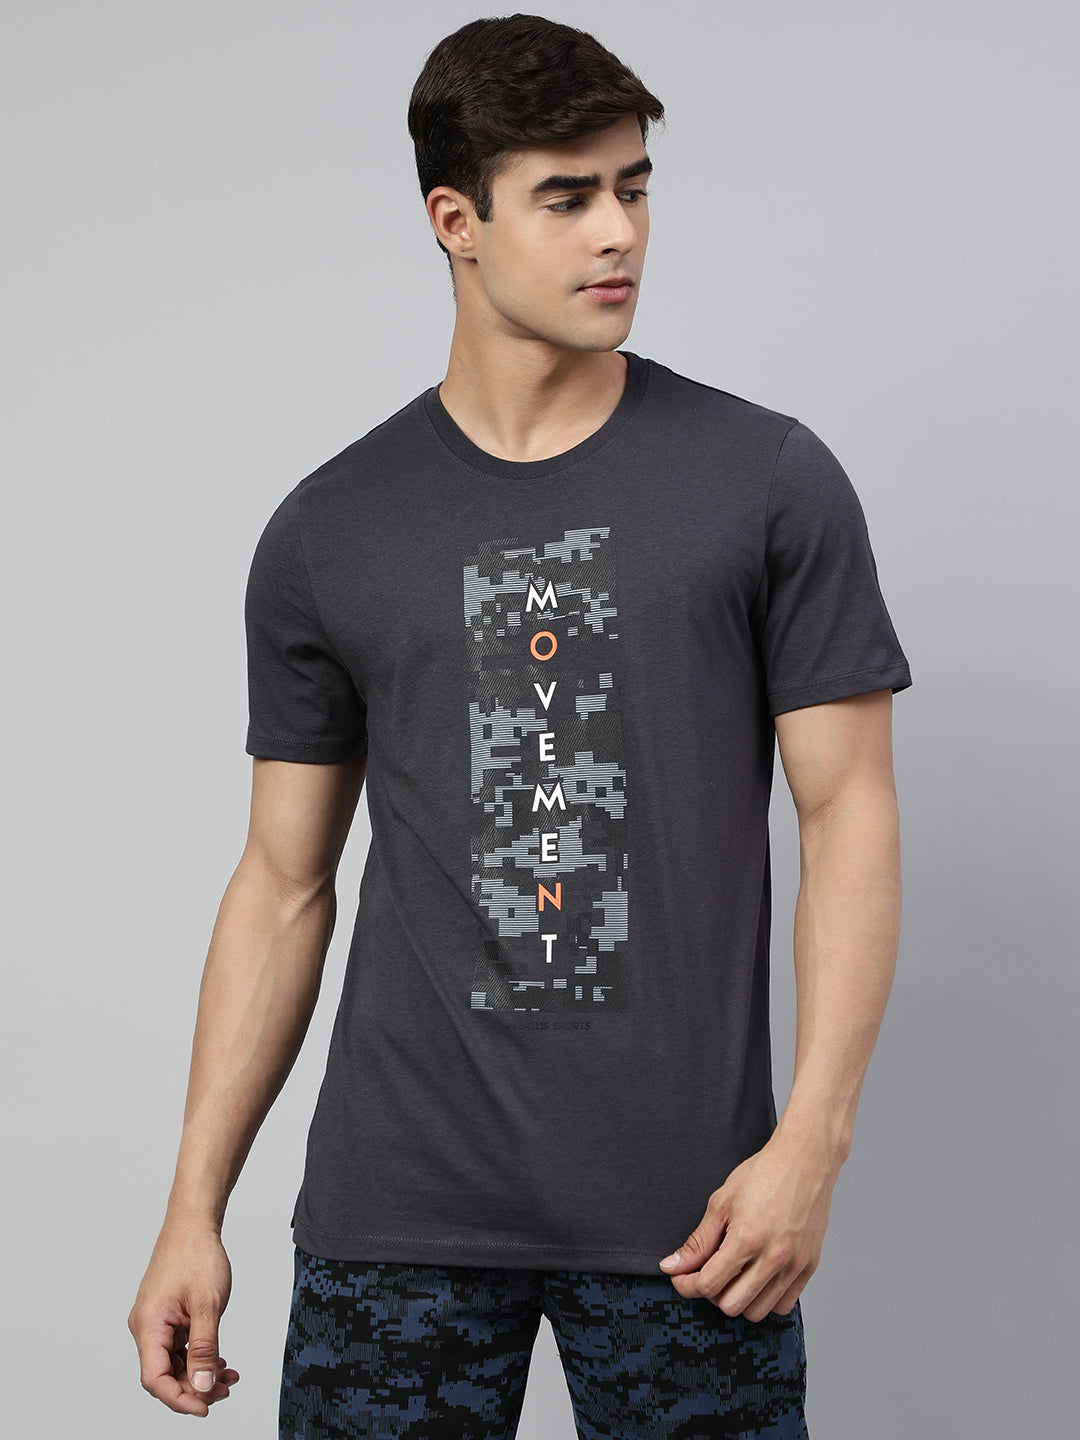 Alcis Men's Asphalt Grey Soft-Touch Regular-Fit Athleisure T-Shirt